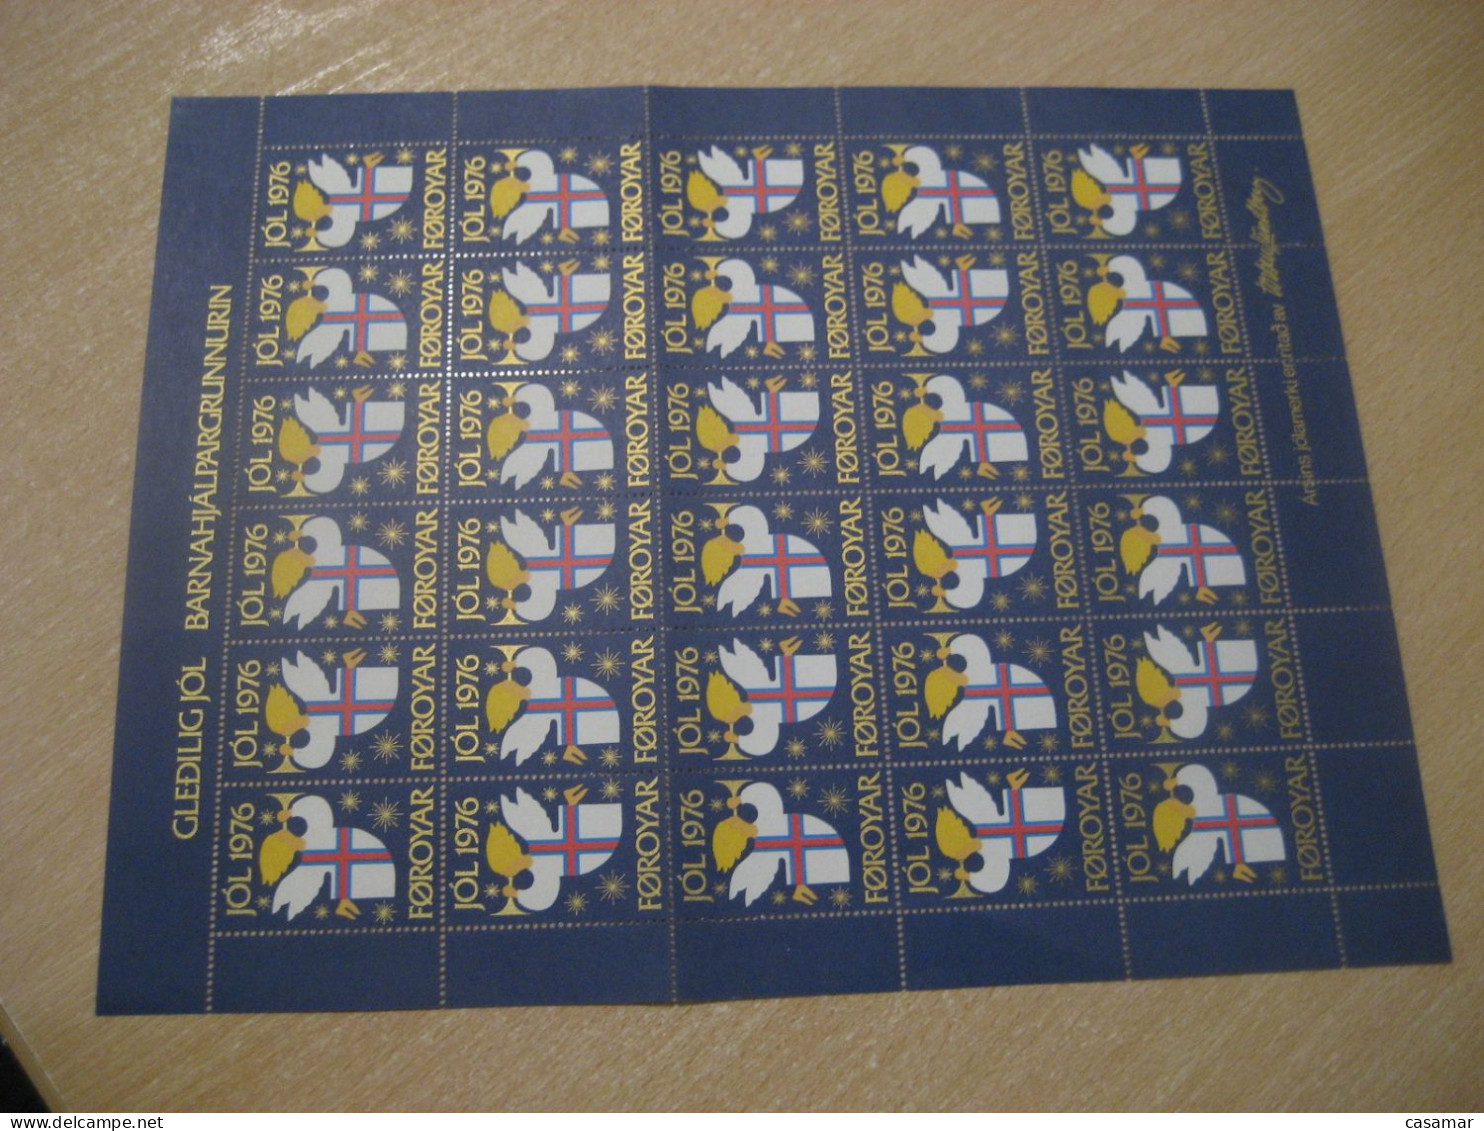 FAROE ISLANDS 1976 Flag Merry Christmas Sheet Bloc 30 Poster Stamp Vignette DENMARK Label Children Aid - Féroé (Iles)